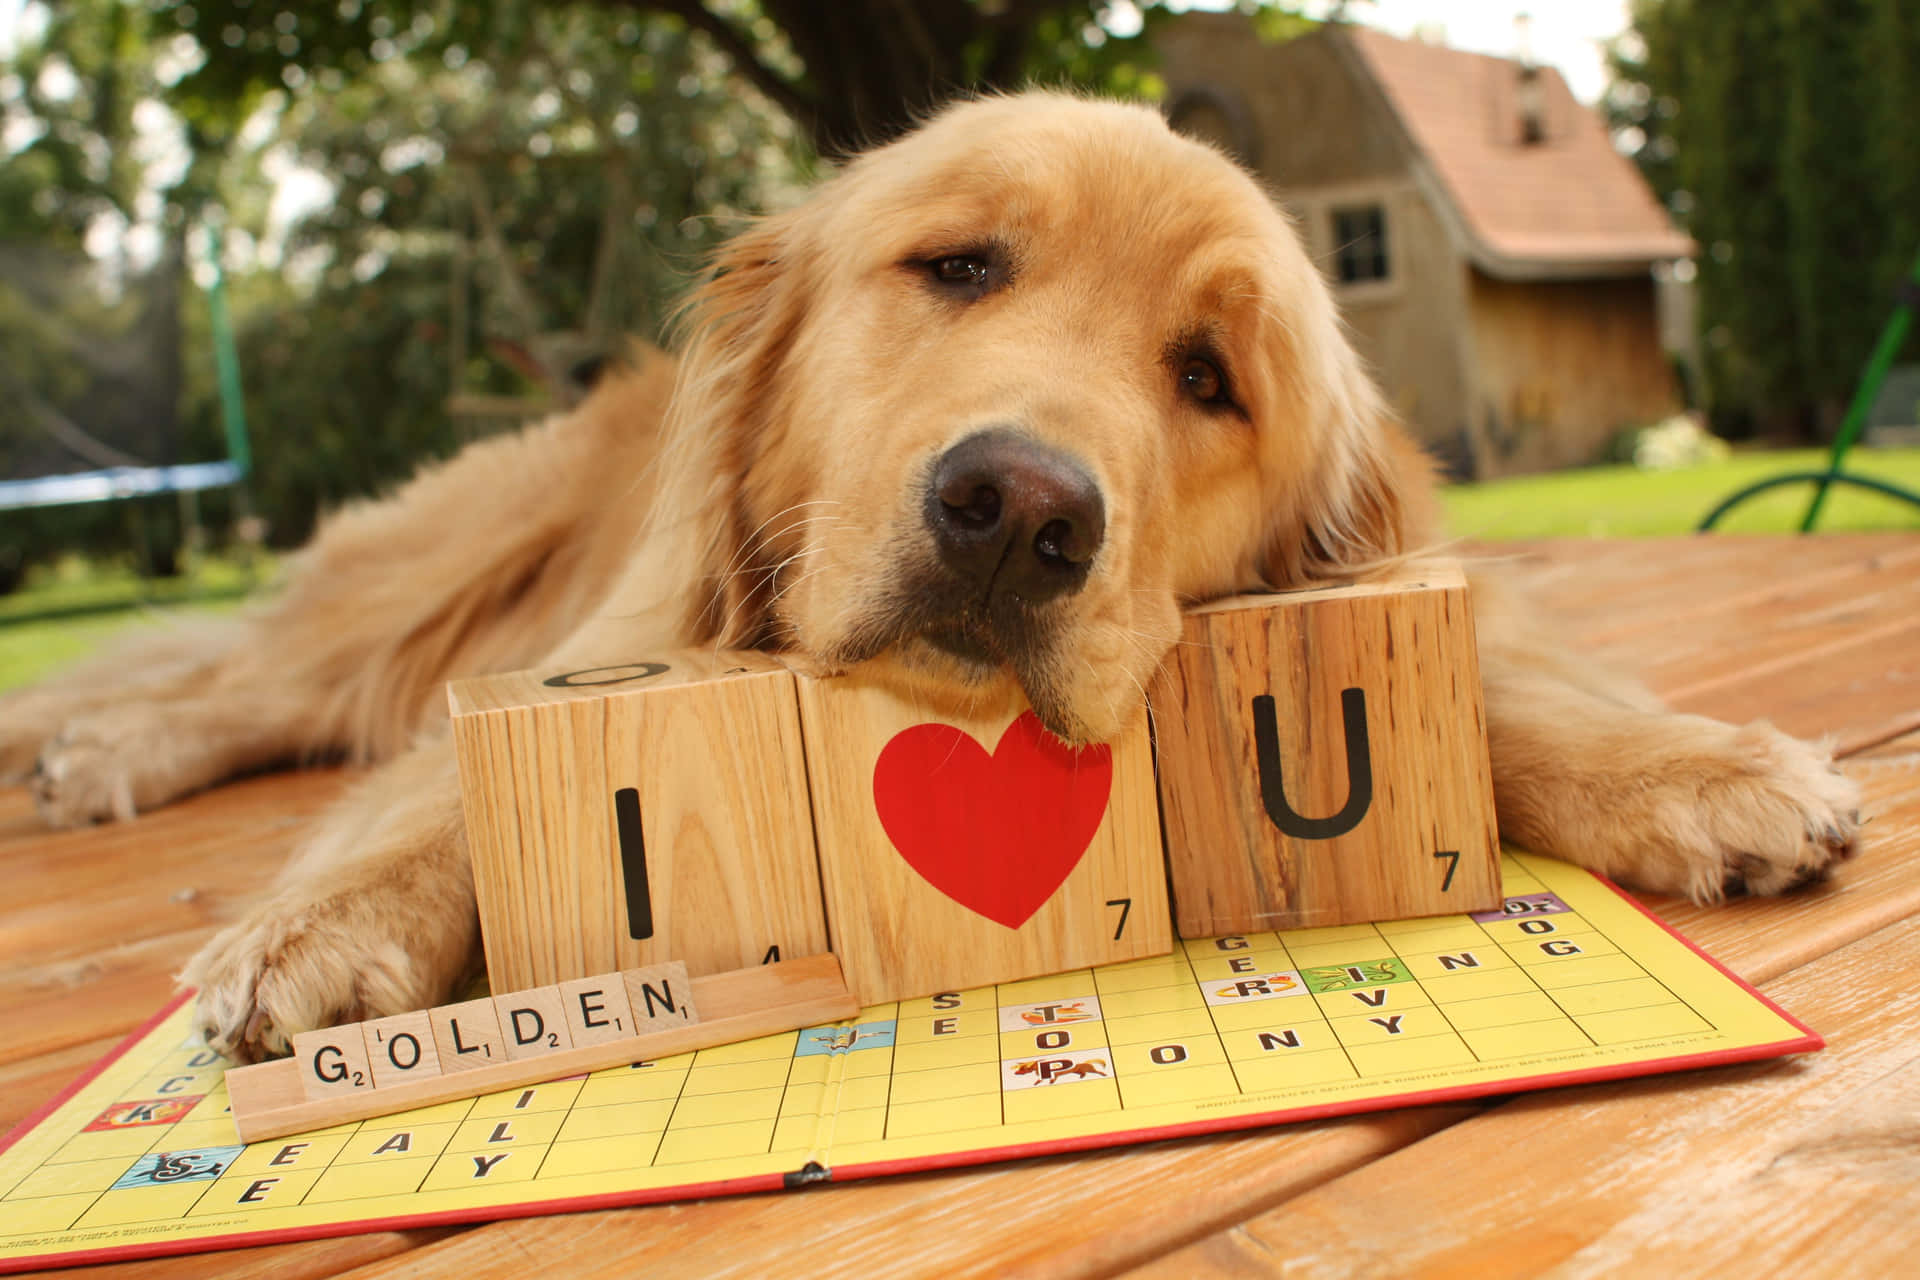 Cute and fluffy golden retriever pup